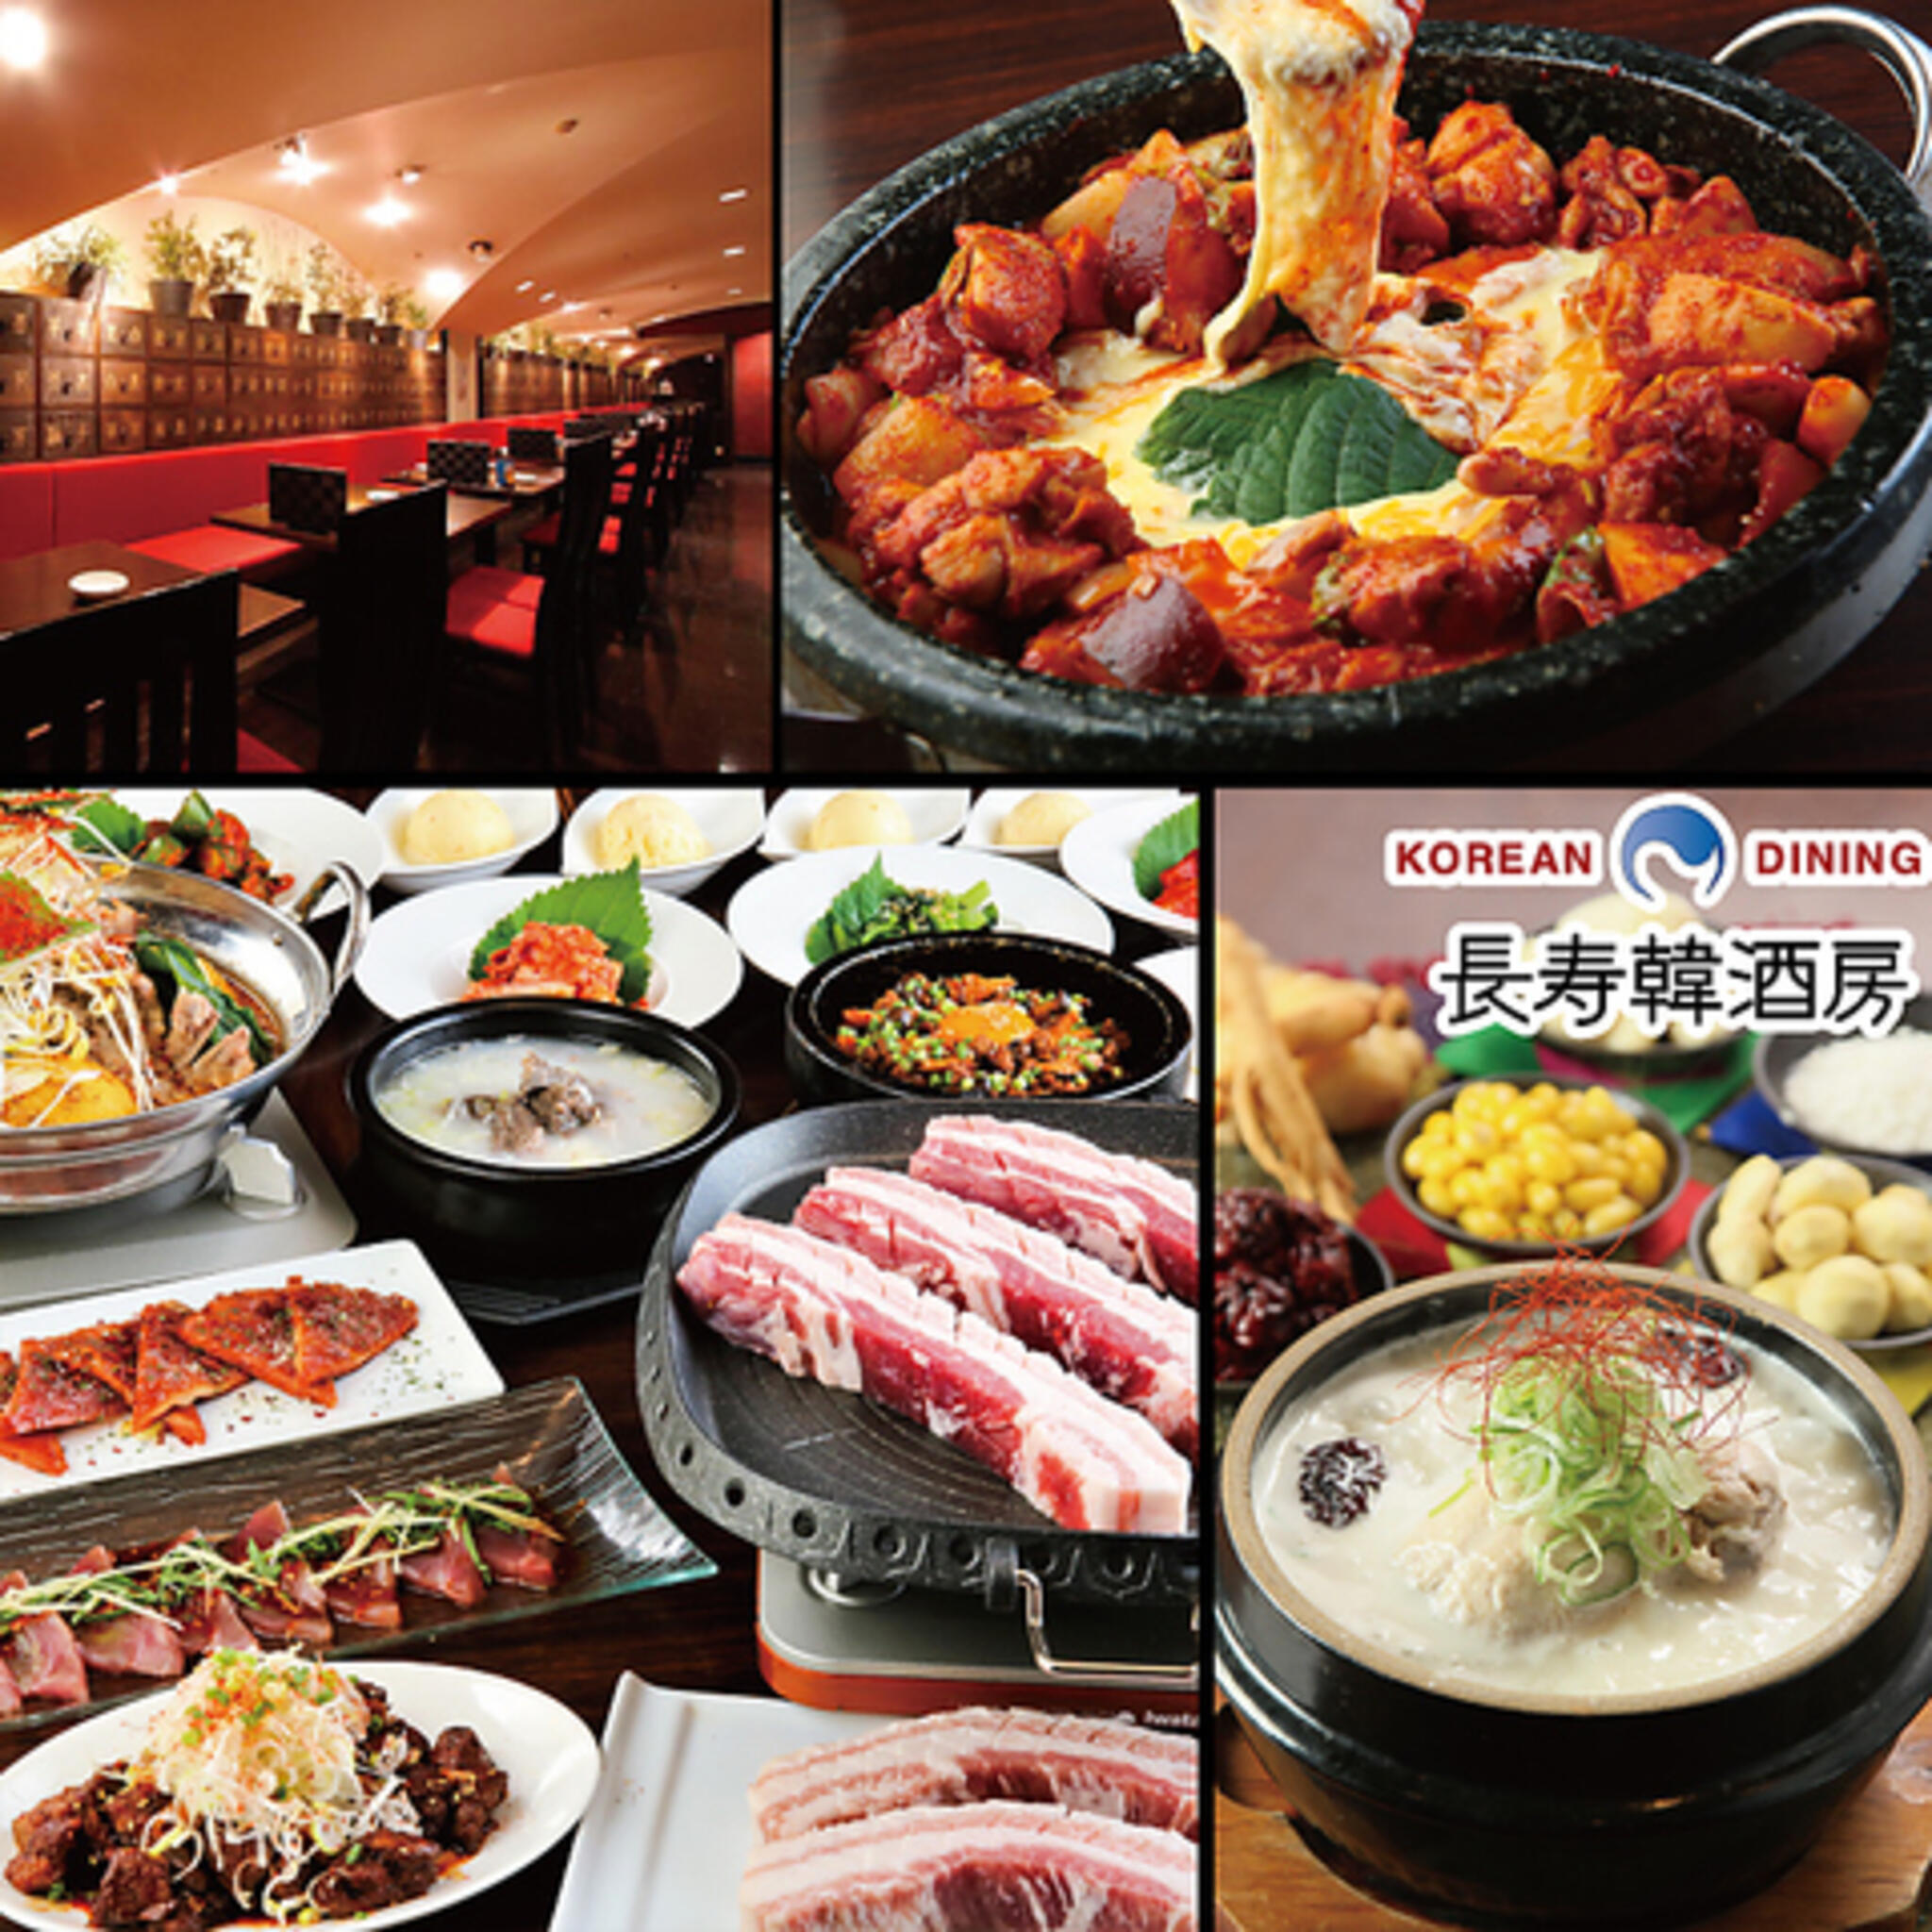 KOREAN DINING長寿韓酒房 銀座店の代表写真1